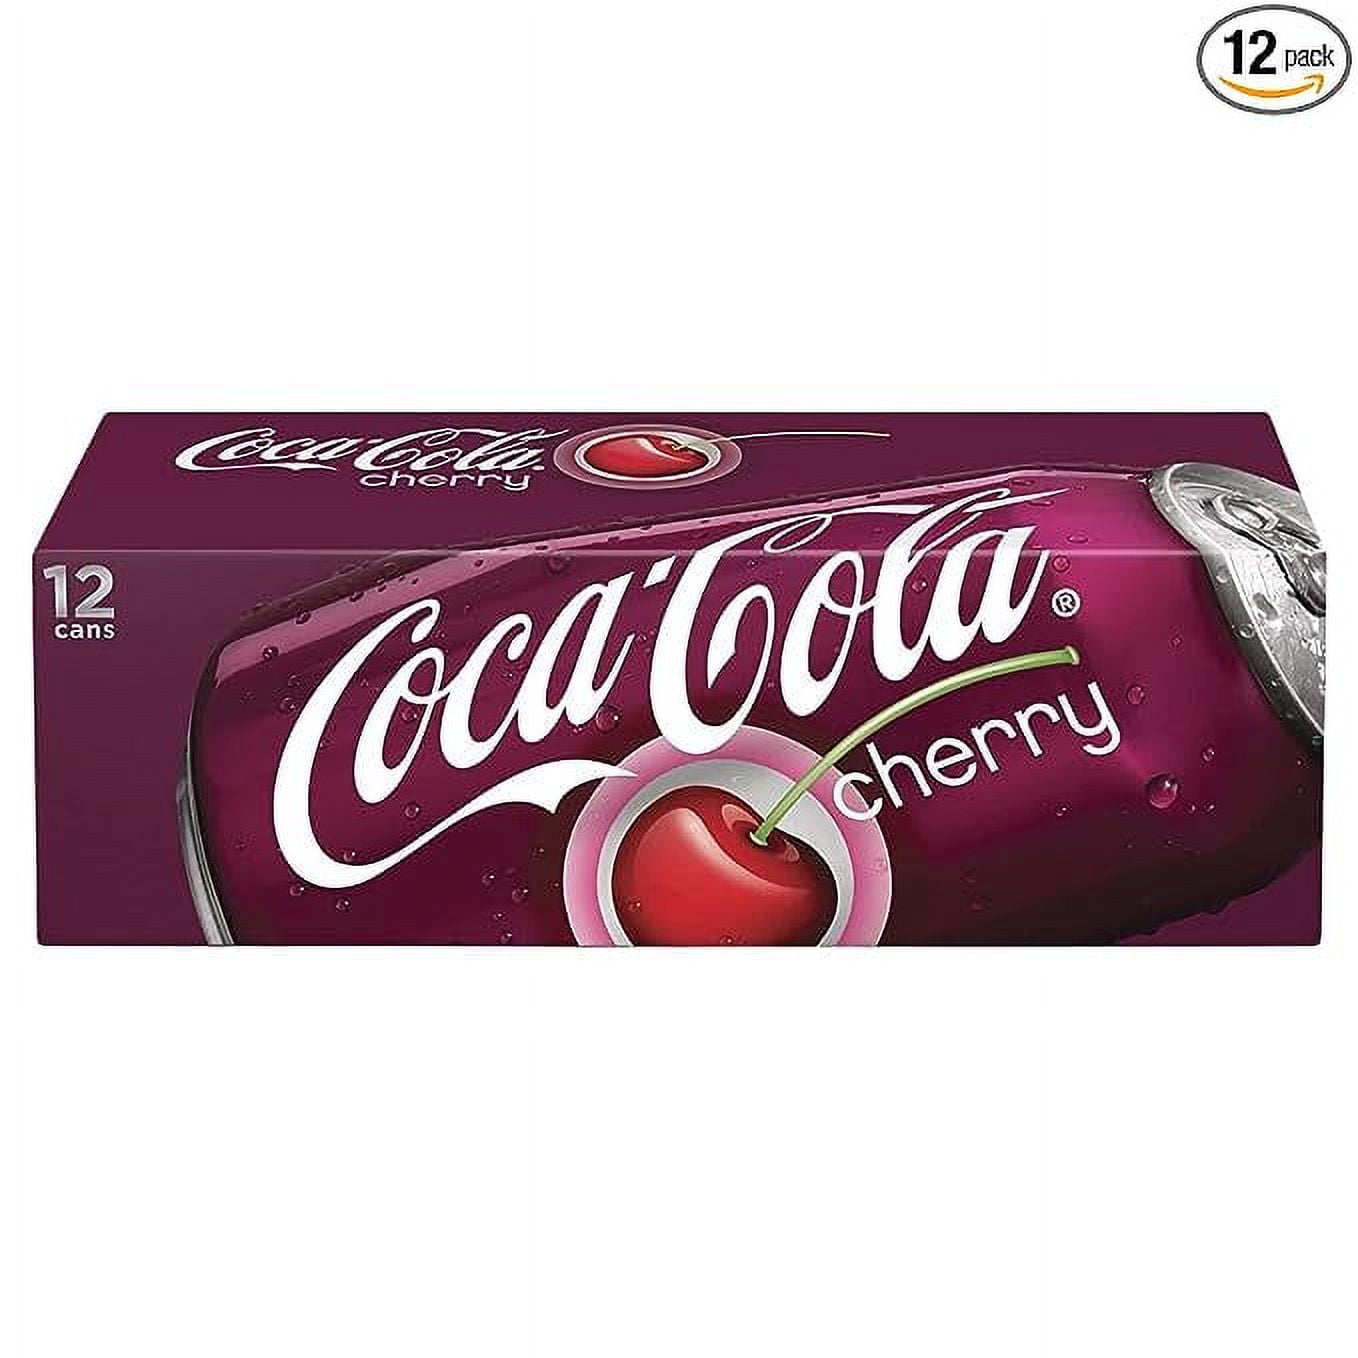 Coca-Cola Soda, Cherry, 12 Pack - 12 pack, 12 fl oz cans